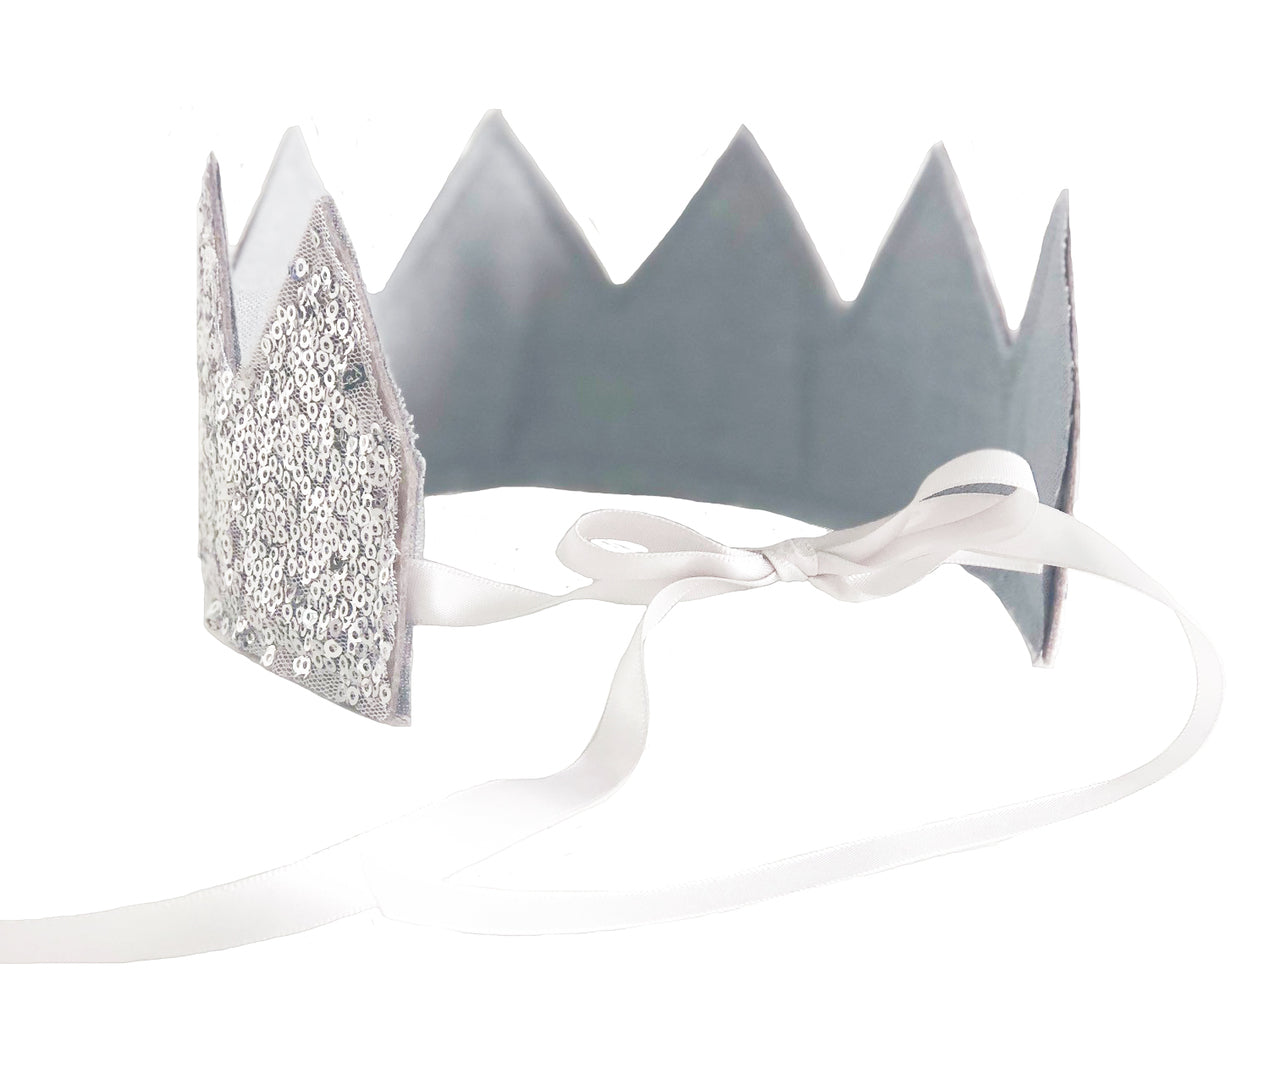 Sequin Sparkle Crown - Silver